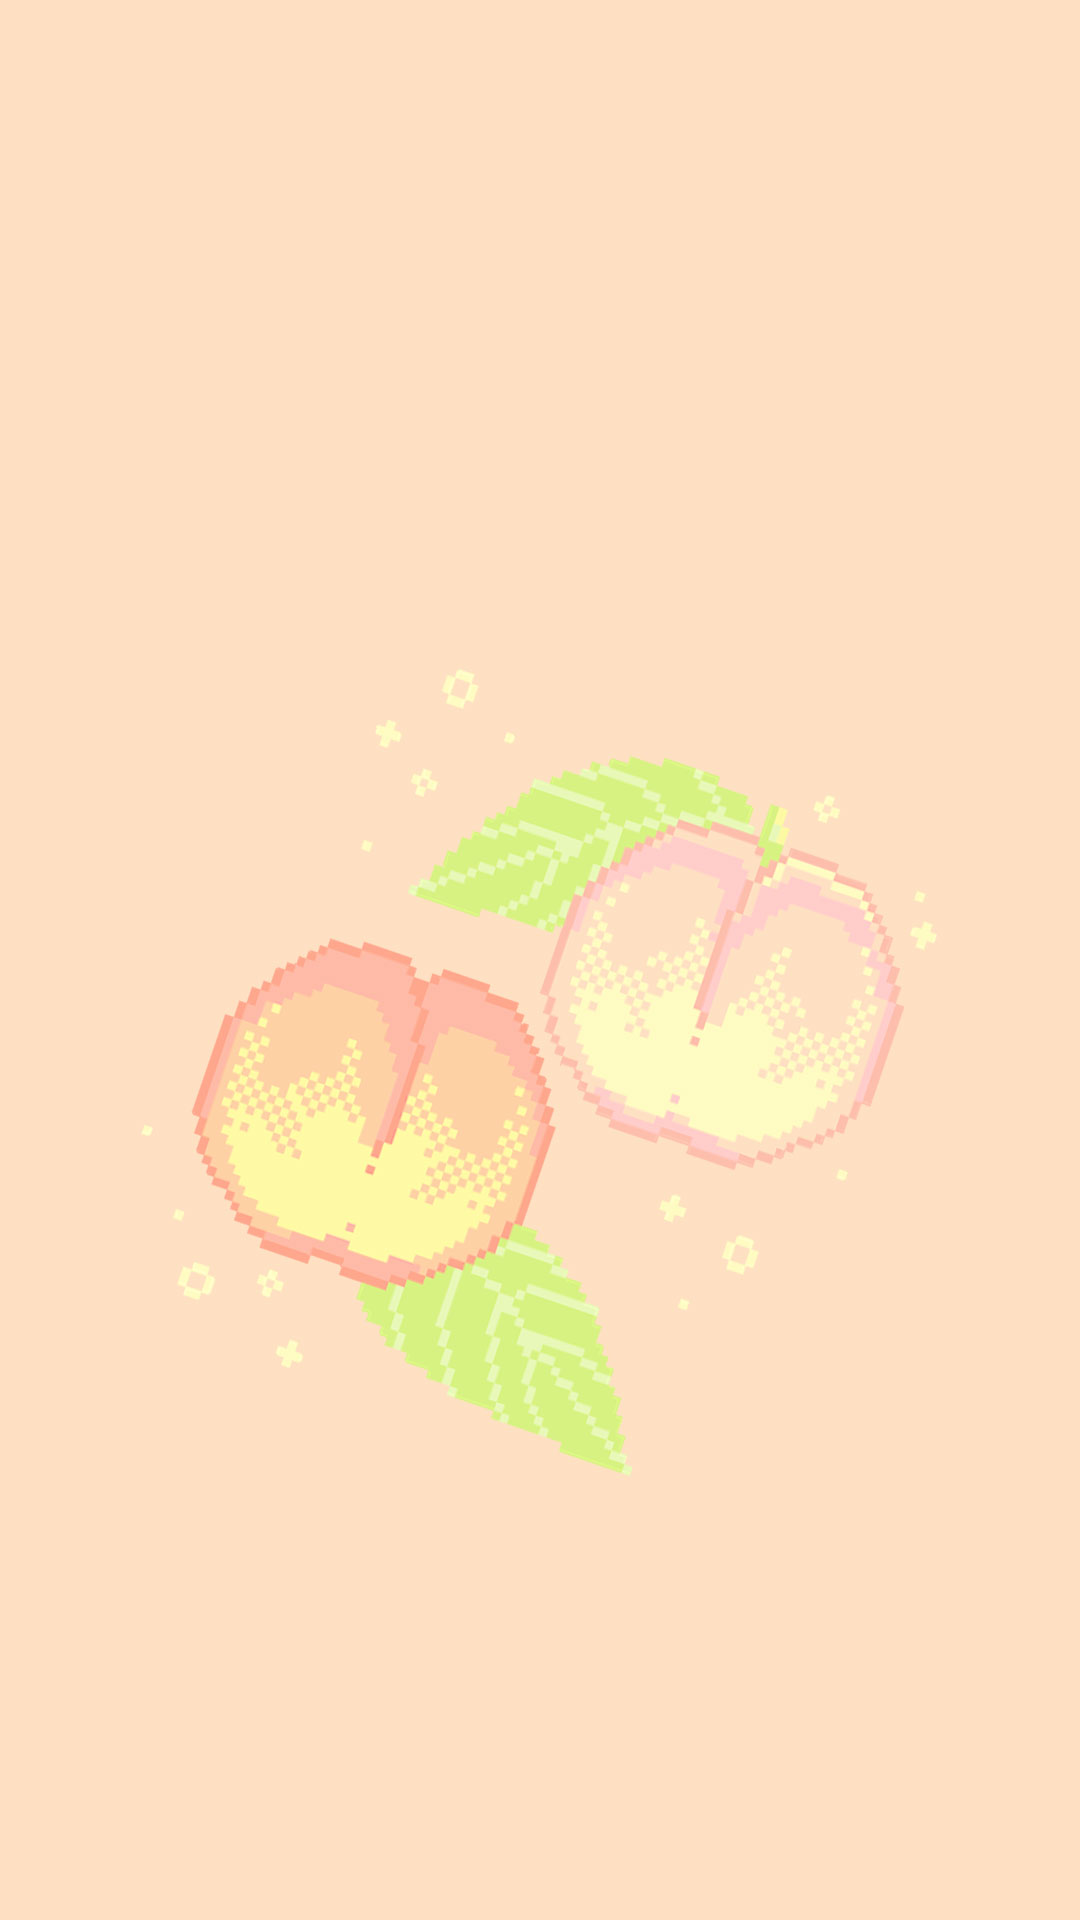 Peach aesthetic wallpaper pixel